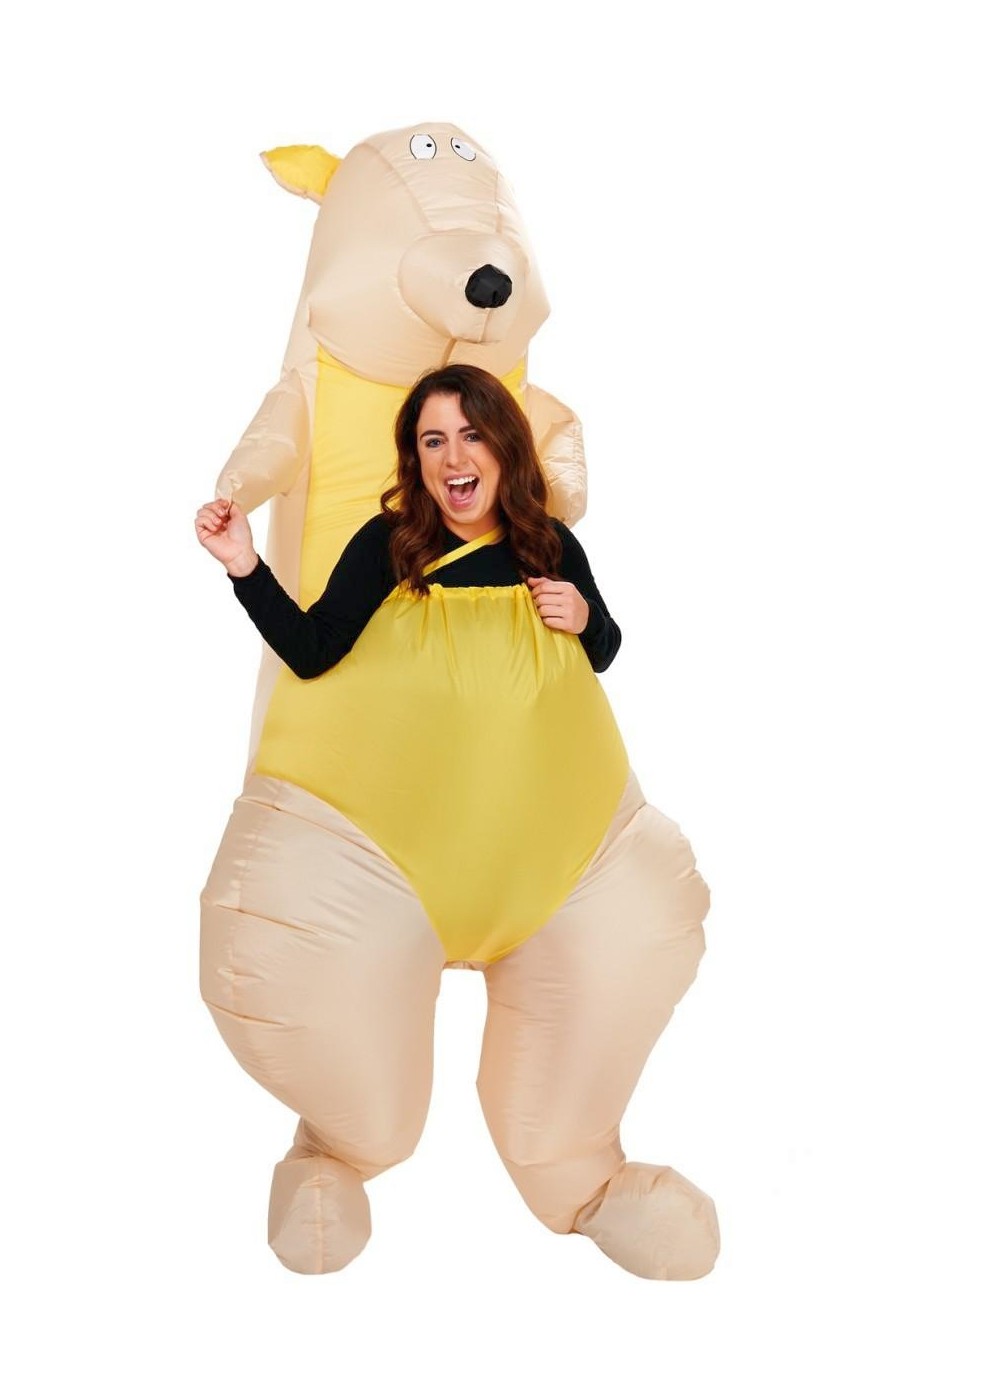  Kangaroo Inflatable Costume